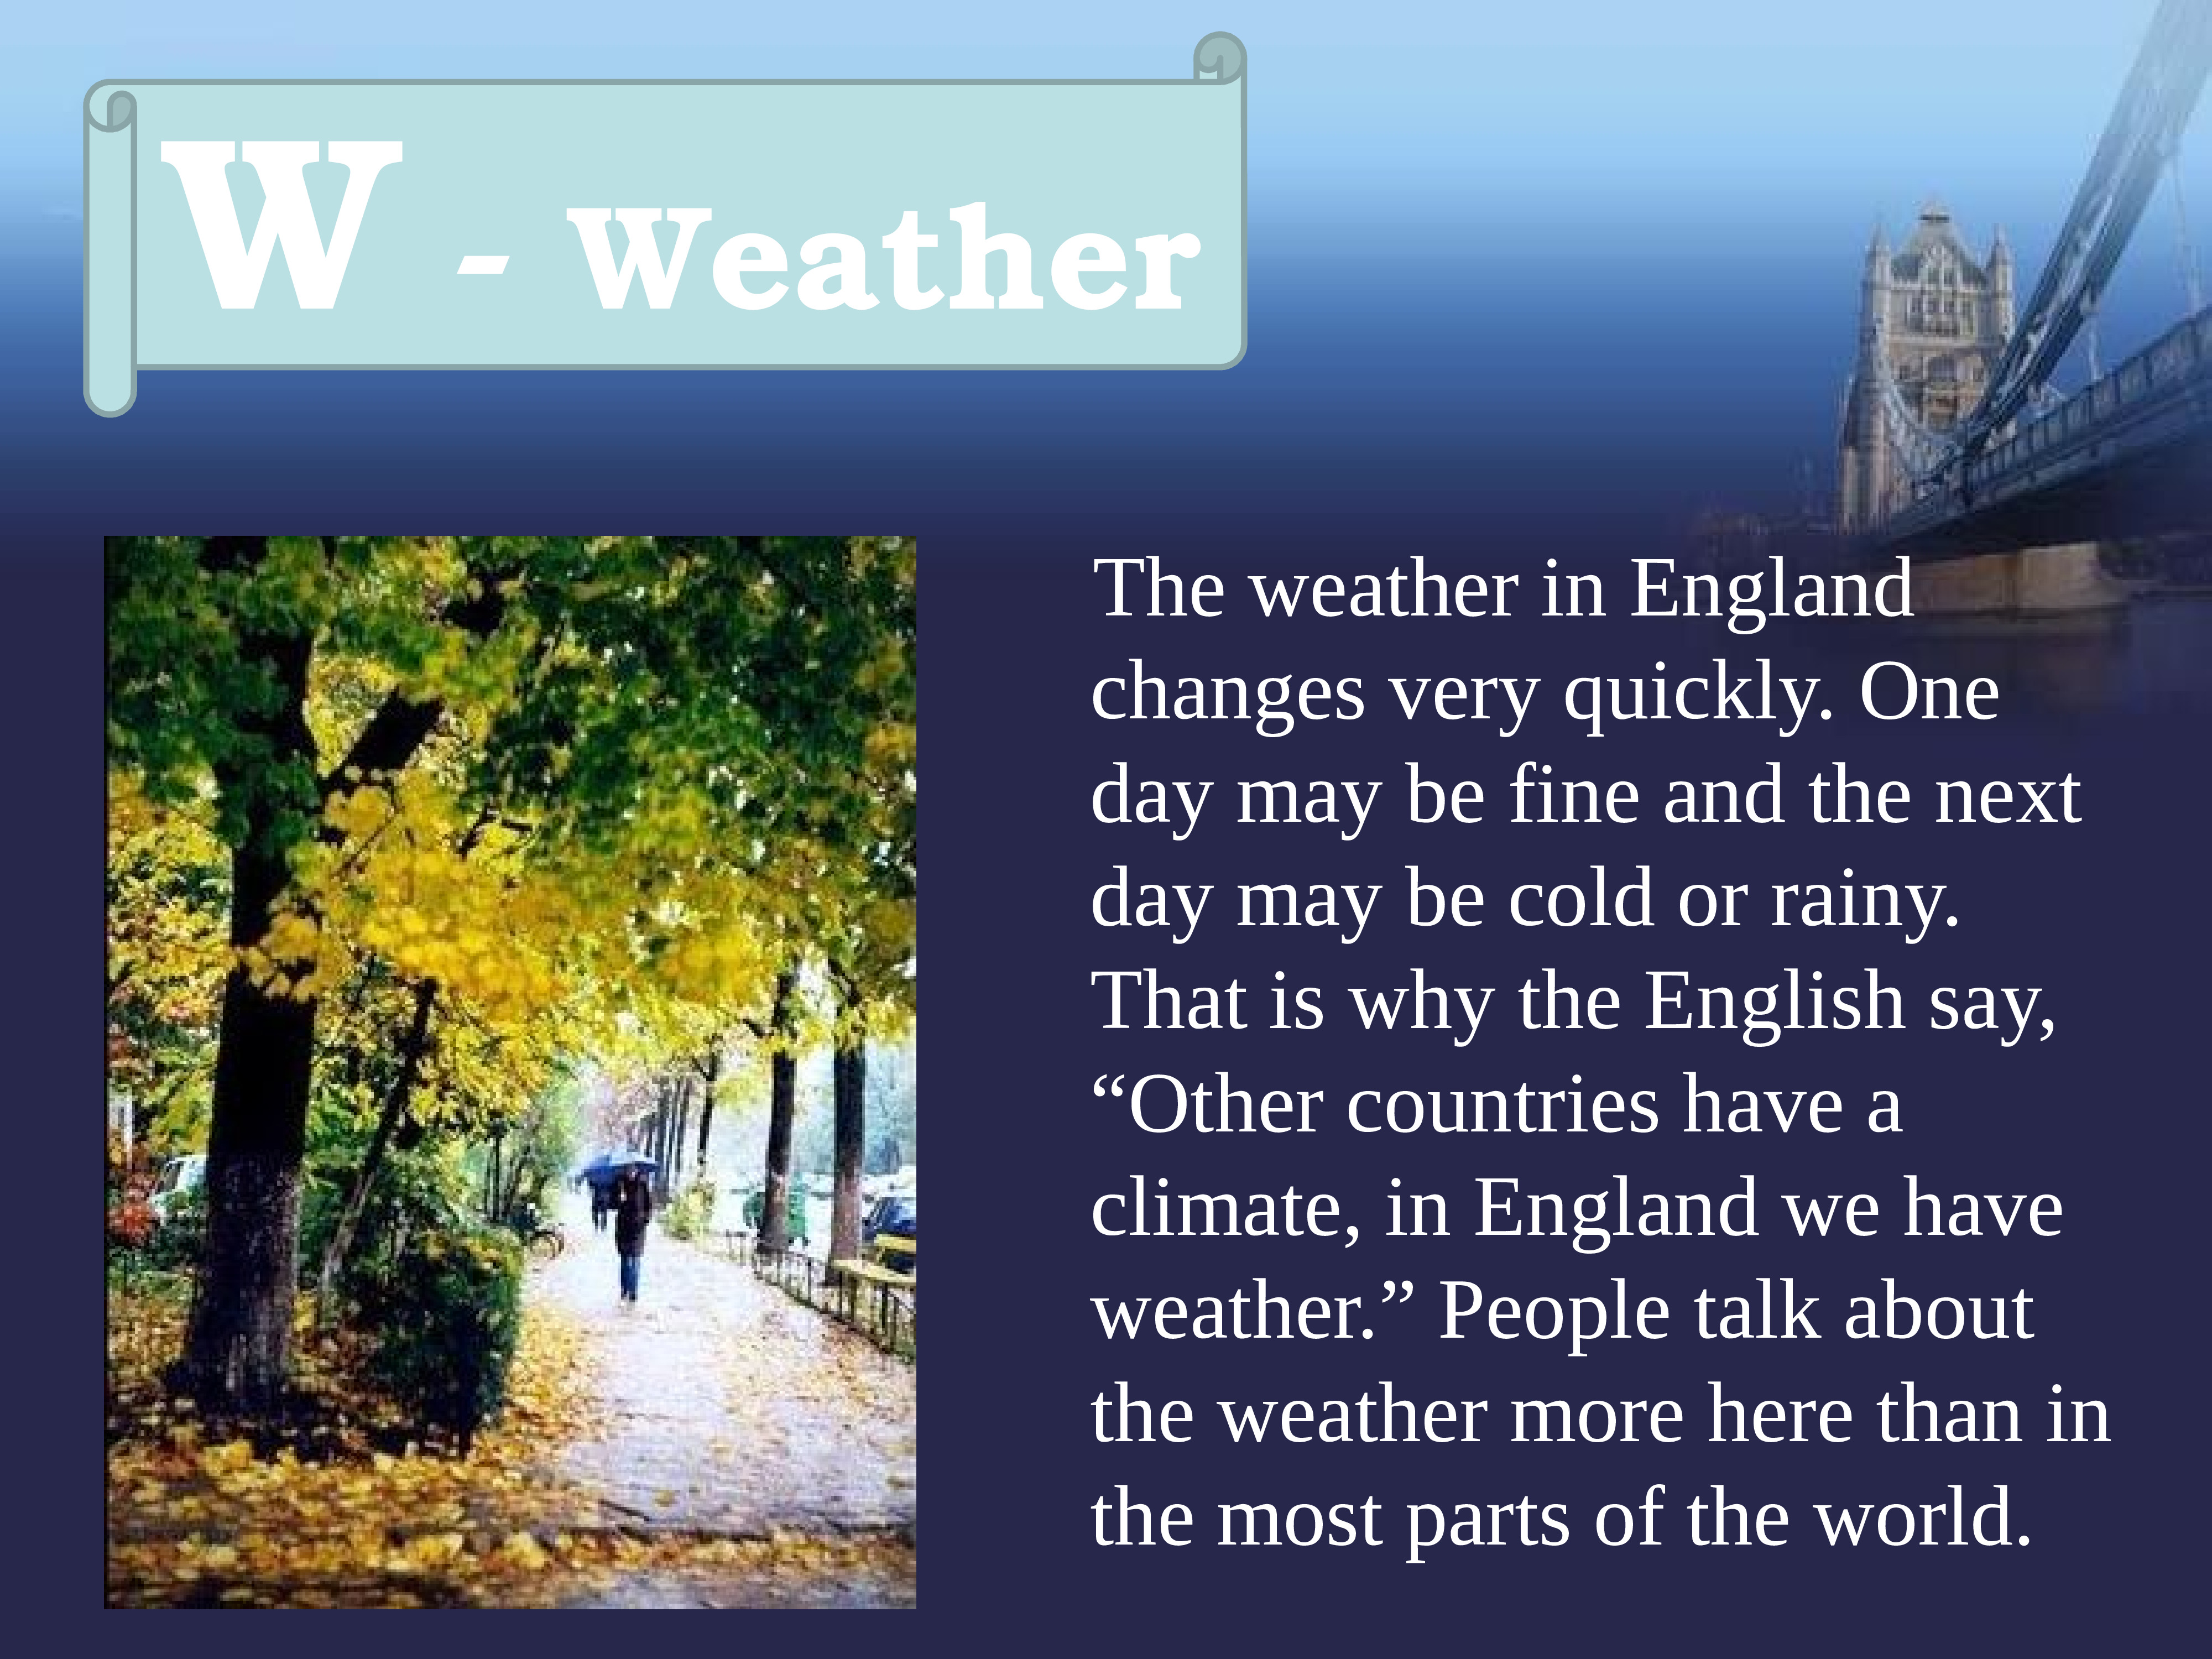 Проект weather. Описание погоды на английском. Weather английский язык. The weather in England текст. Погода по английски.